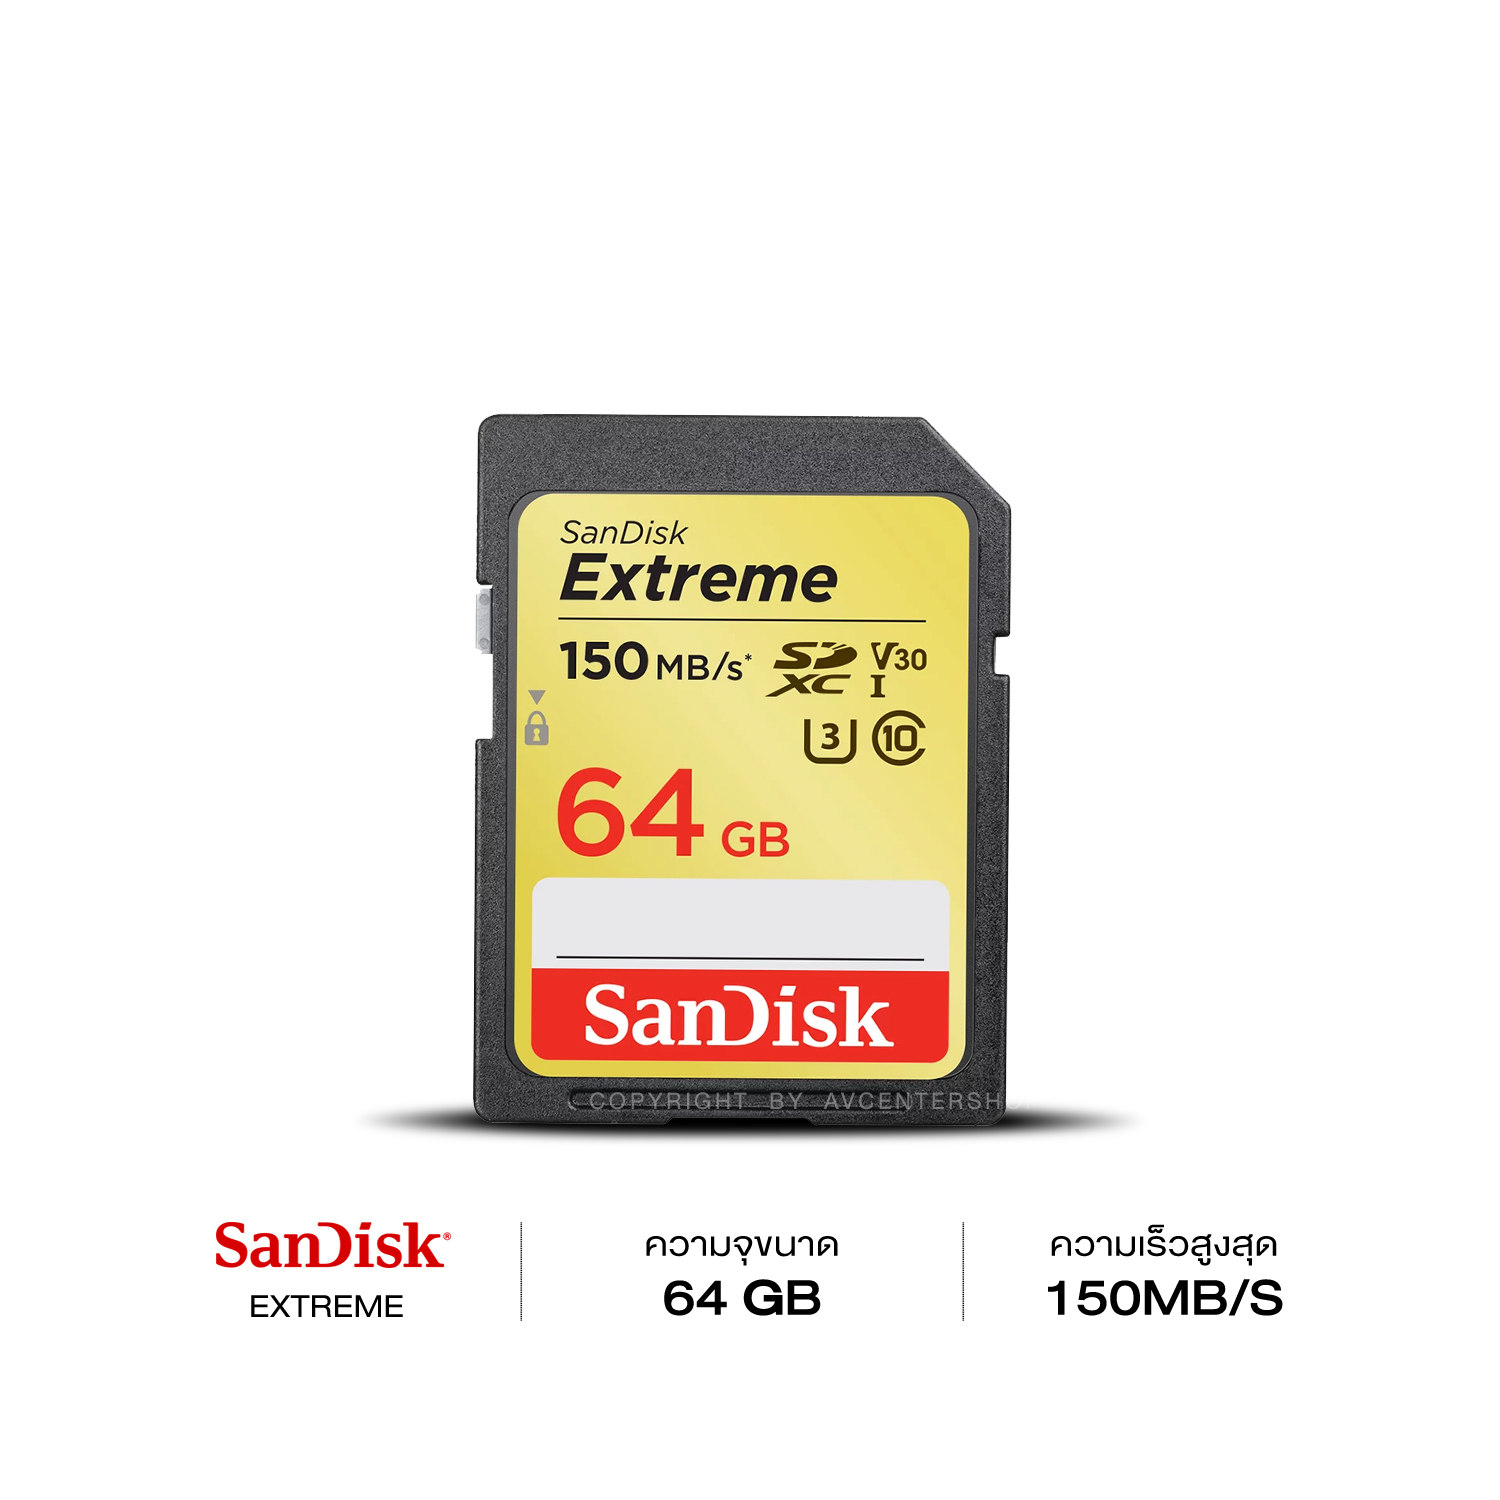 SanDisk SD Card 64 GB. Extreme  ความเร็ว 150 MB